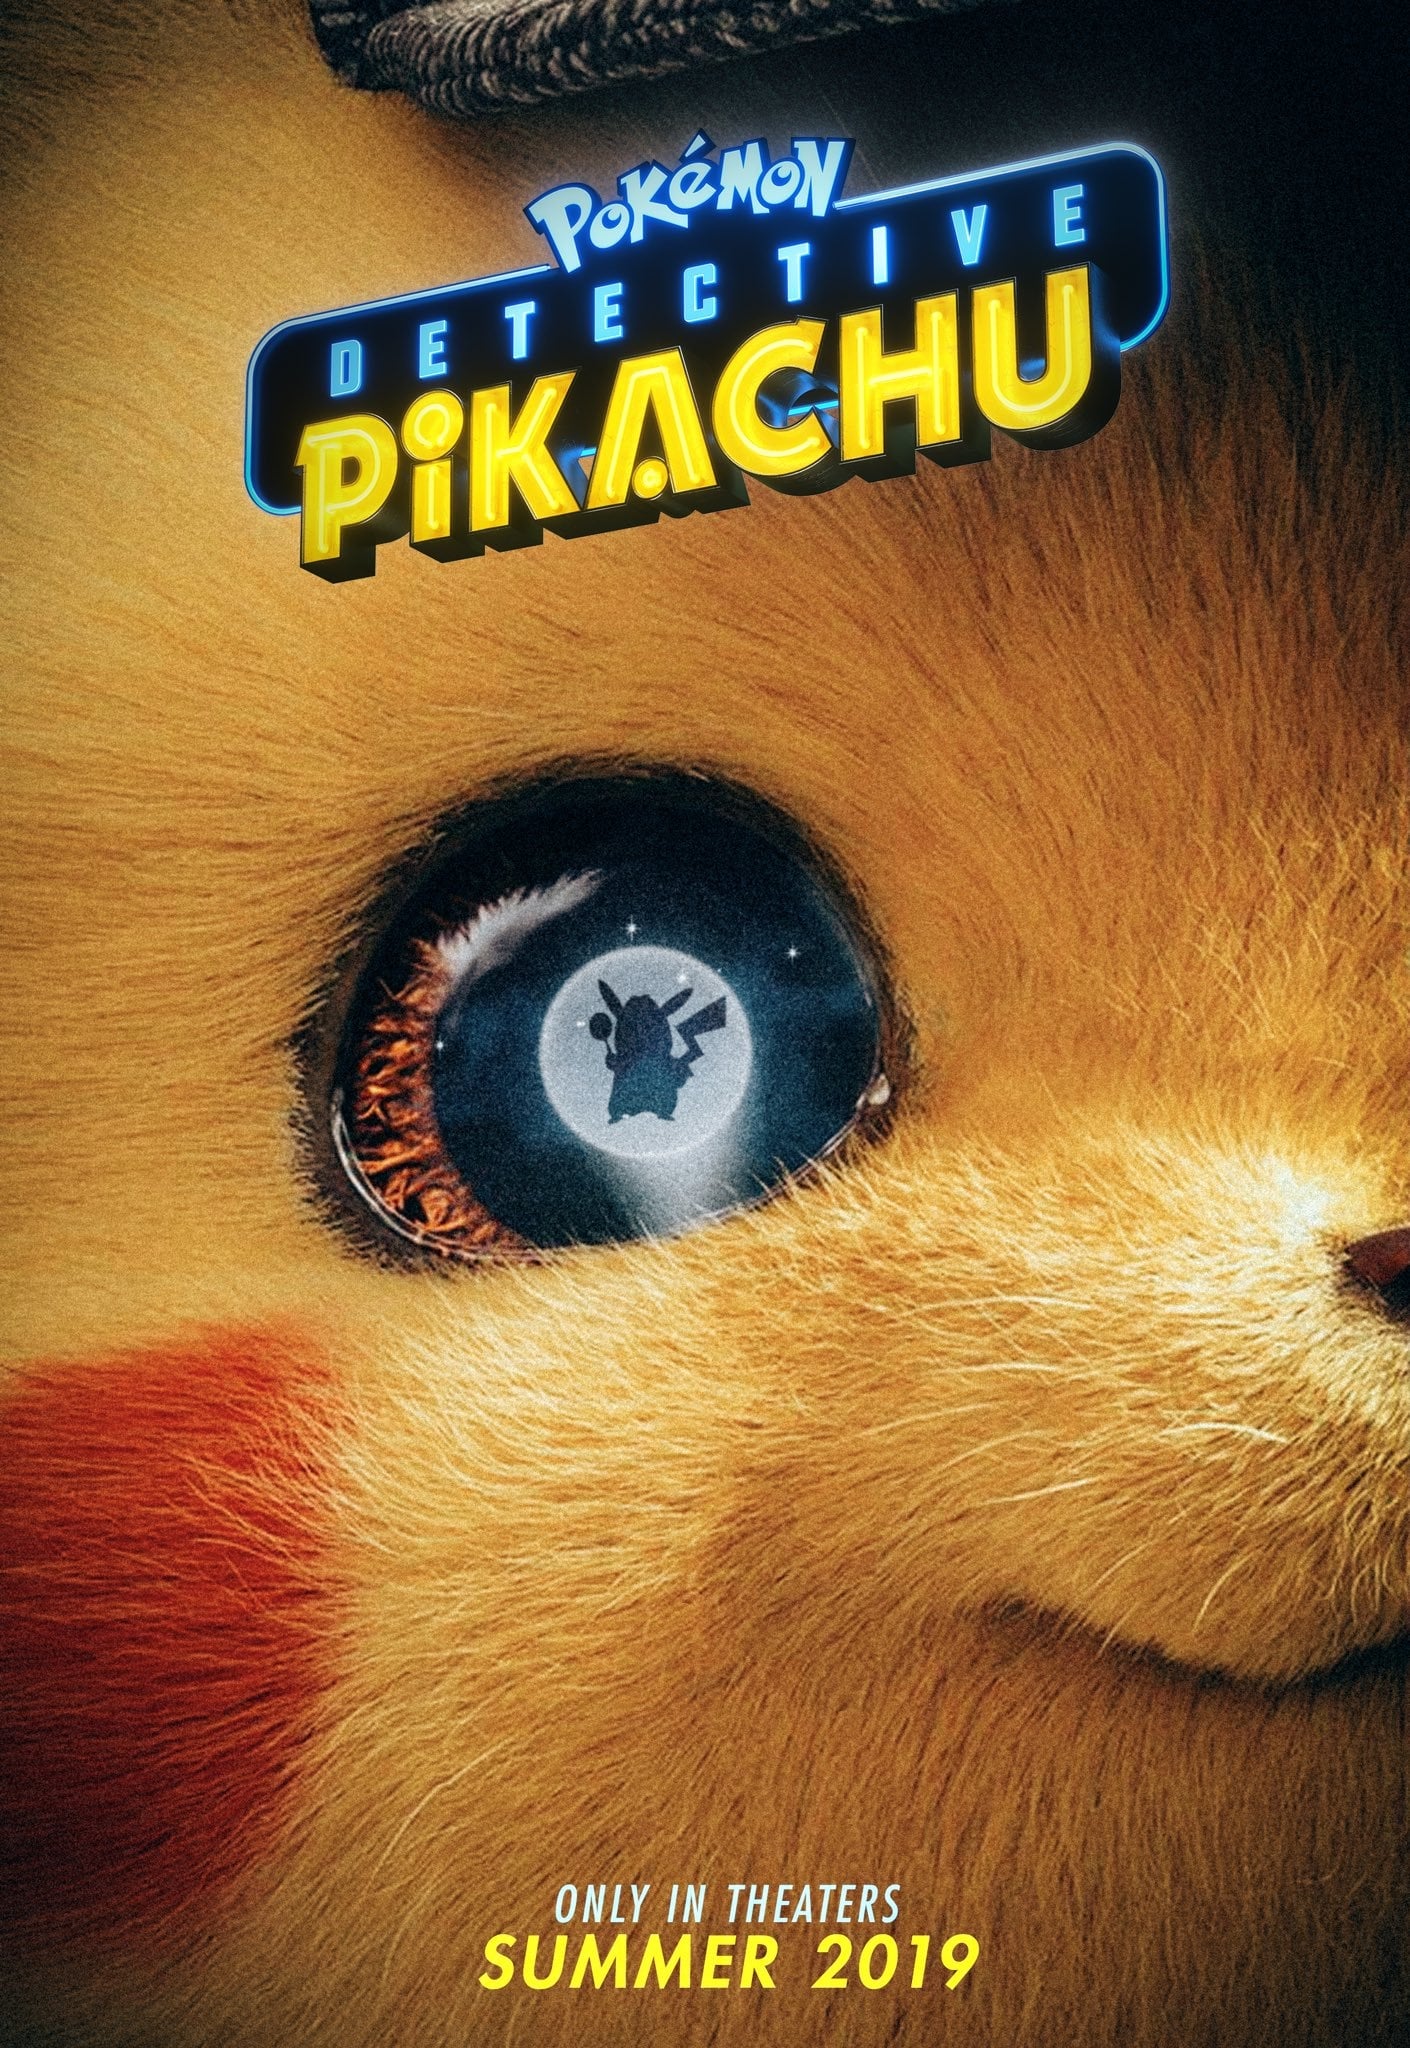 Film Review - Pokémon Detective Pikachu (2019)